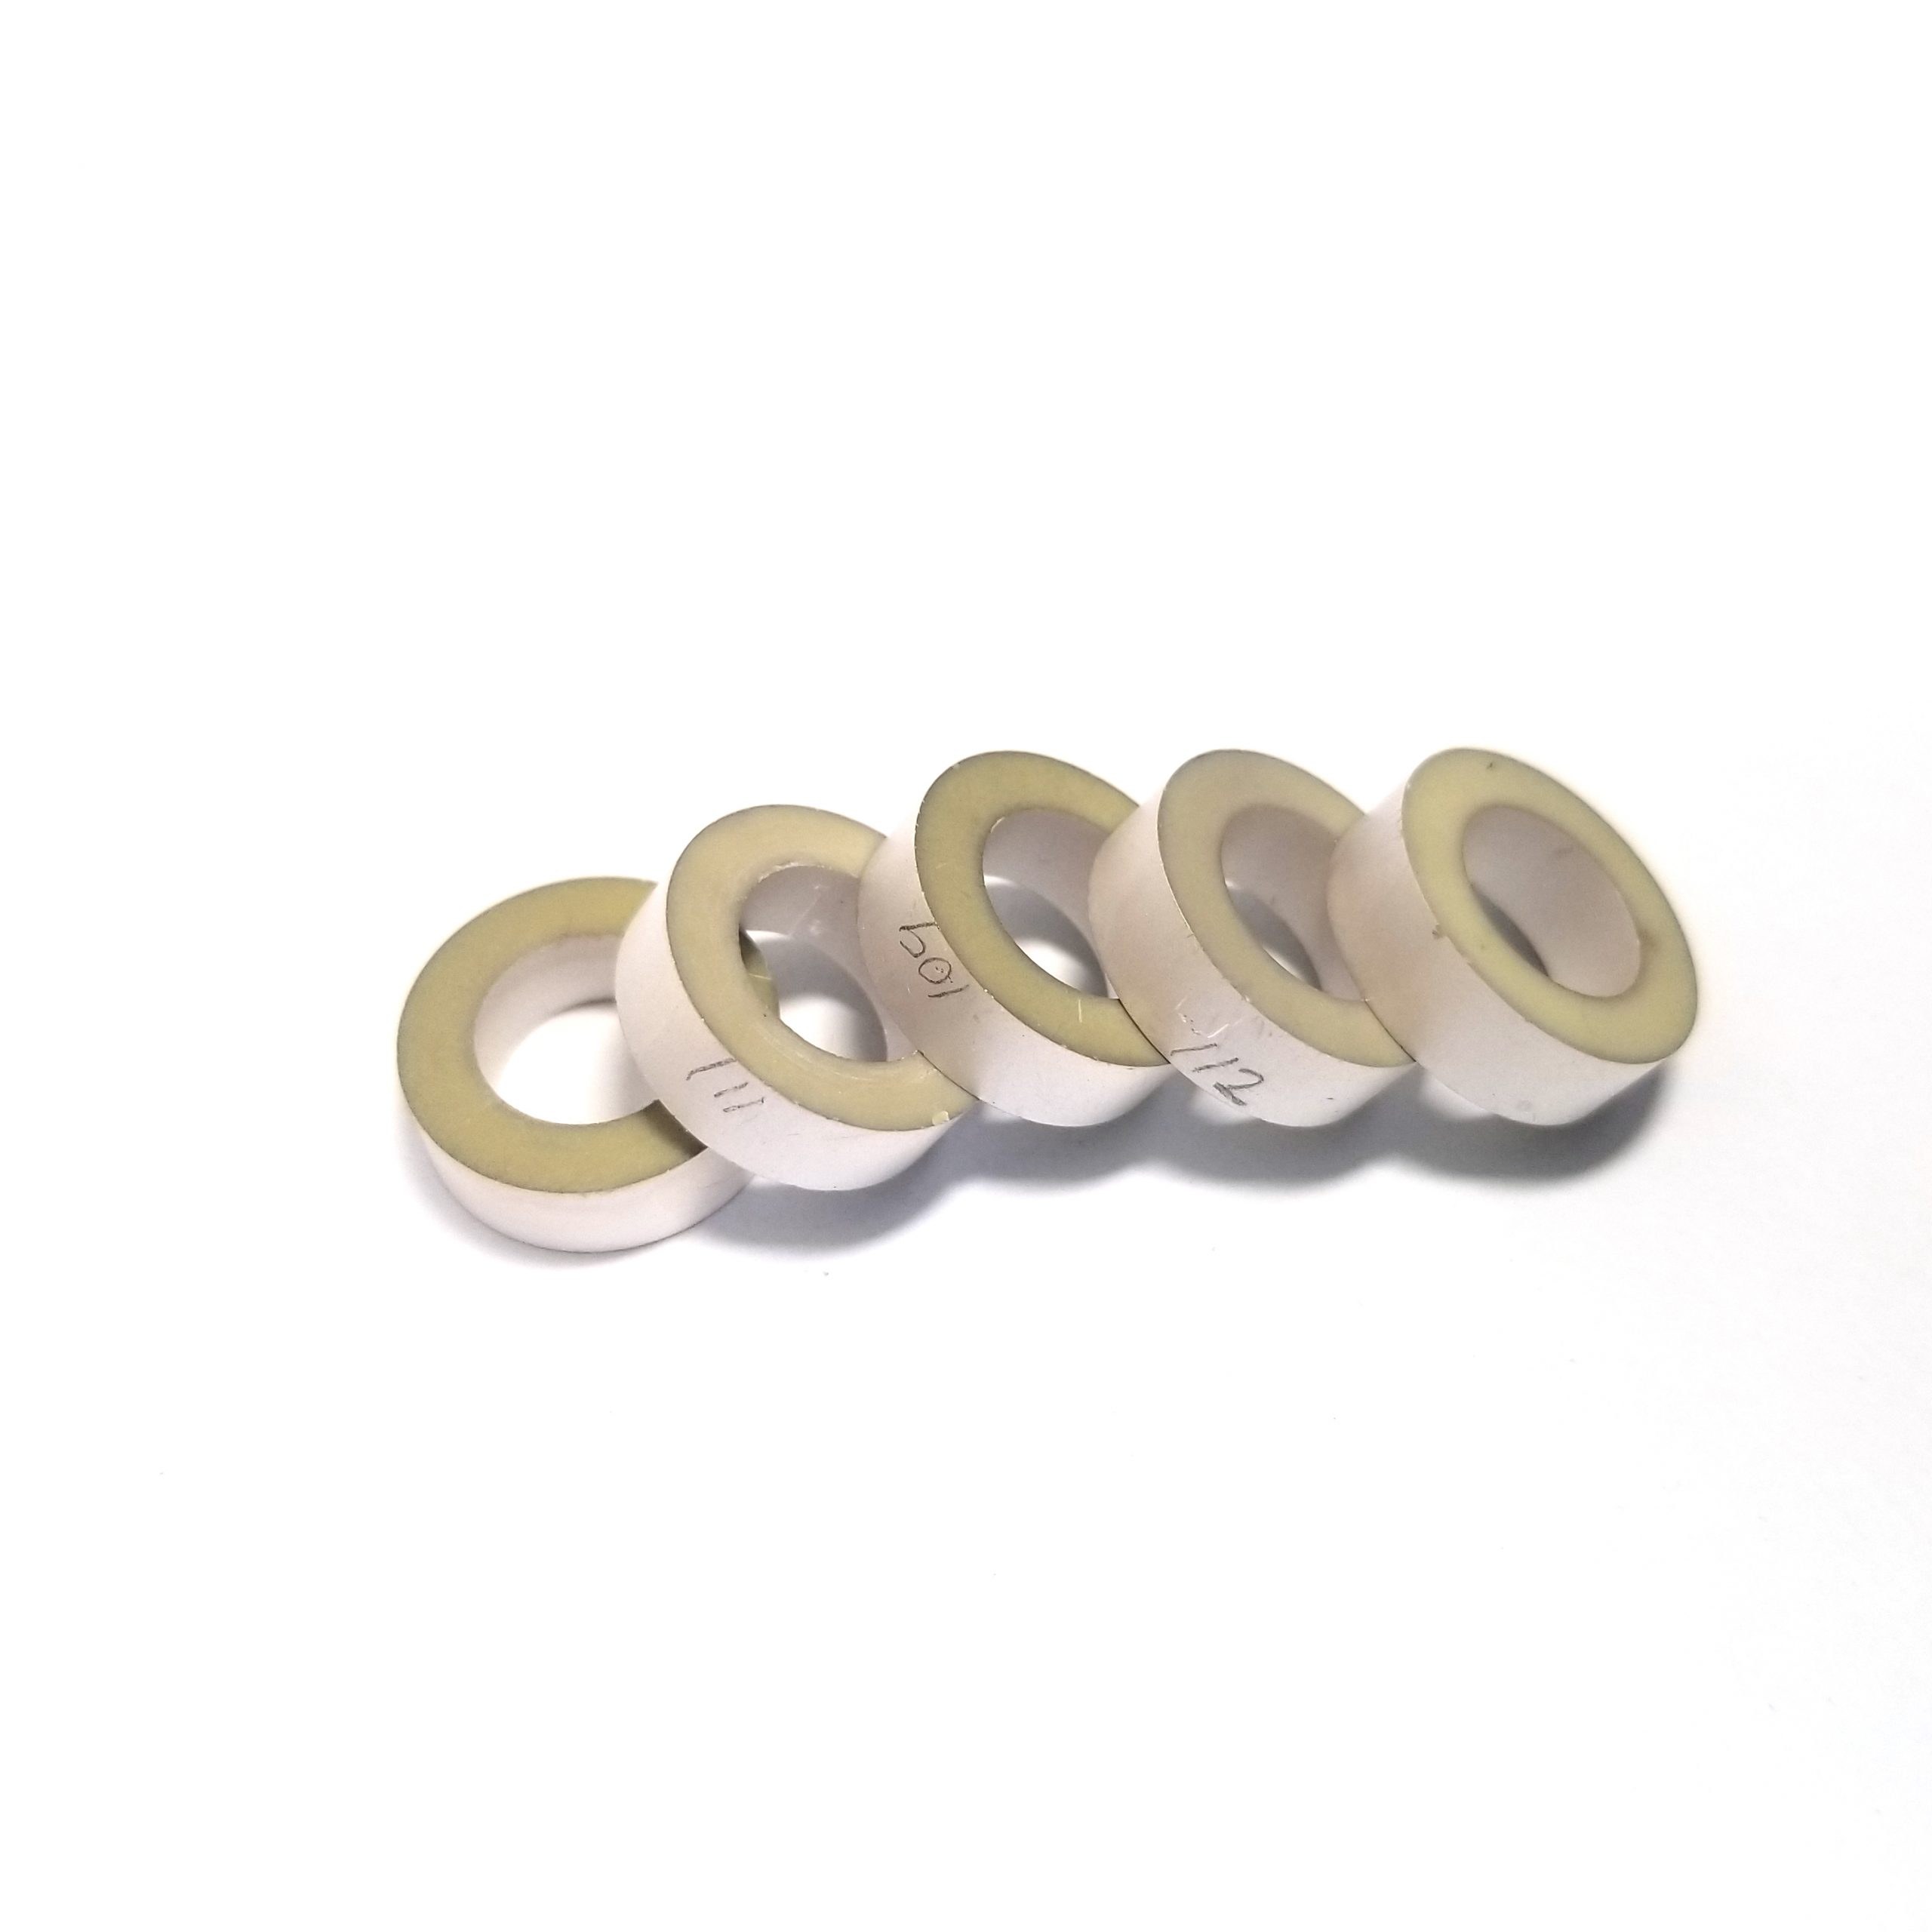 20190416 122607 scaled - Pzt-82 Customize Ultrasonic Piezo Element Piezoelectric Ceramic Ring 10*5*2mm 149hz Piezo Ceramic Ring